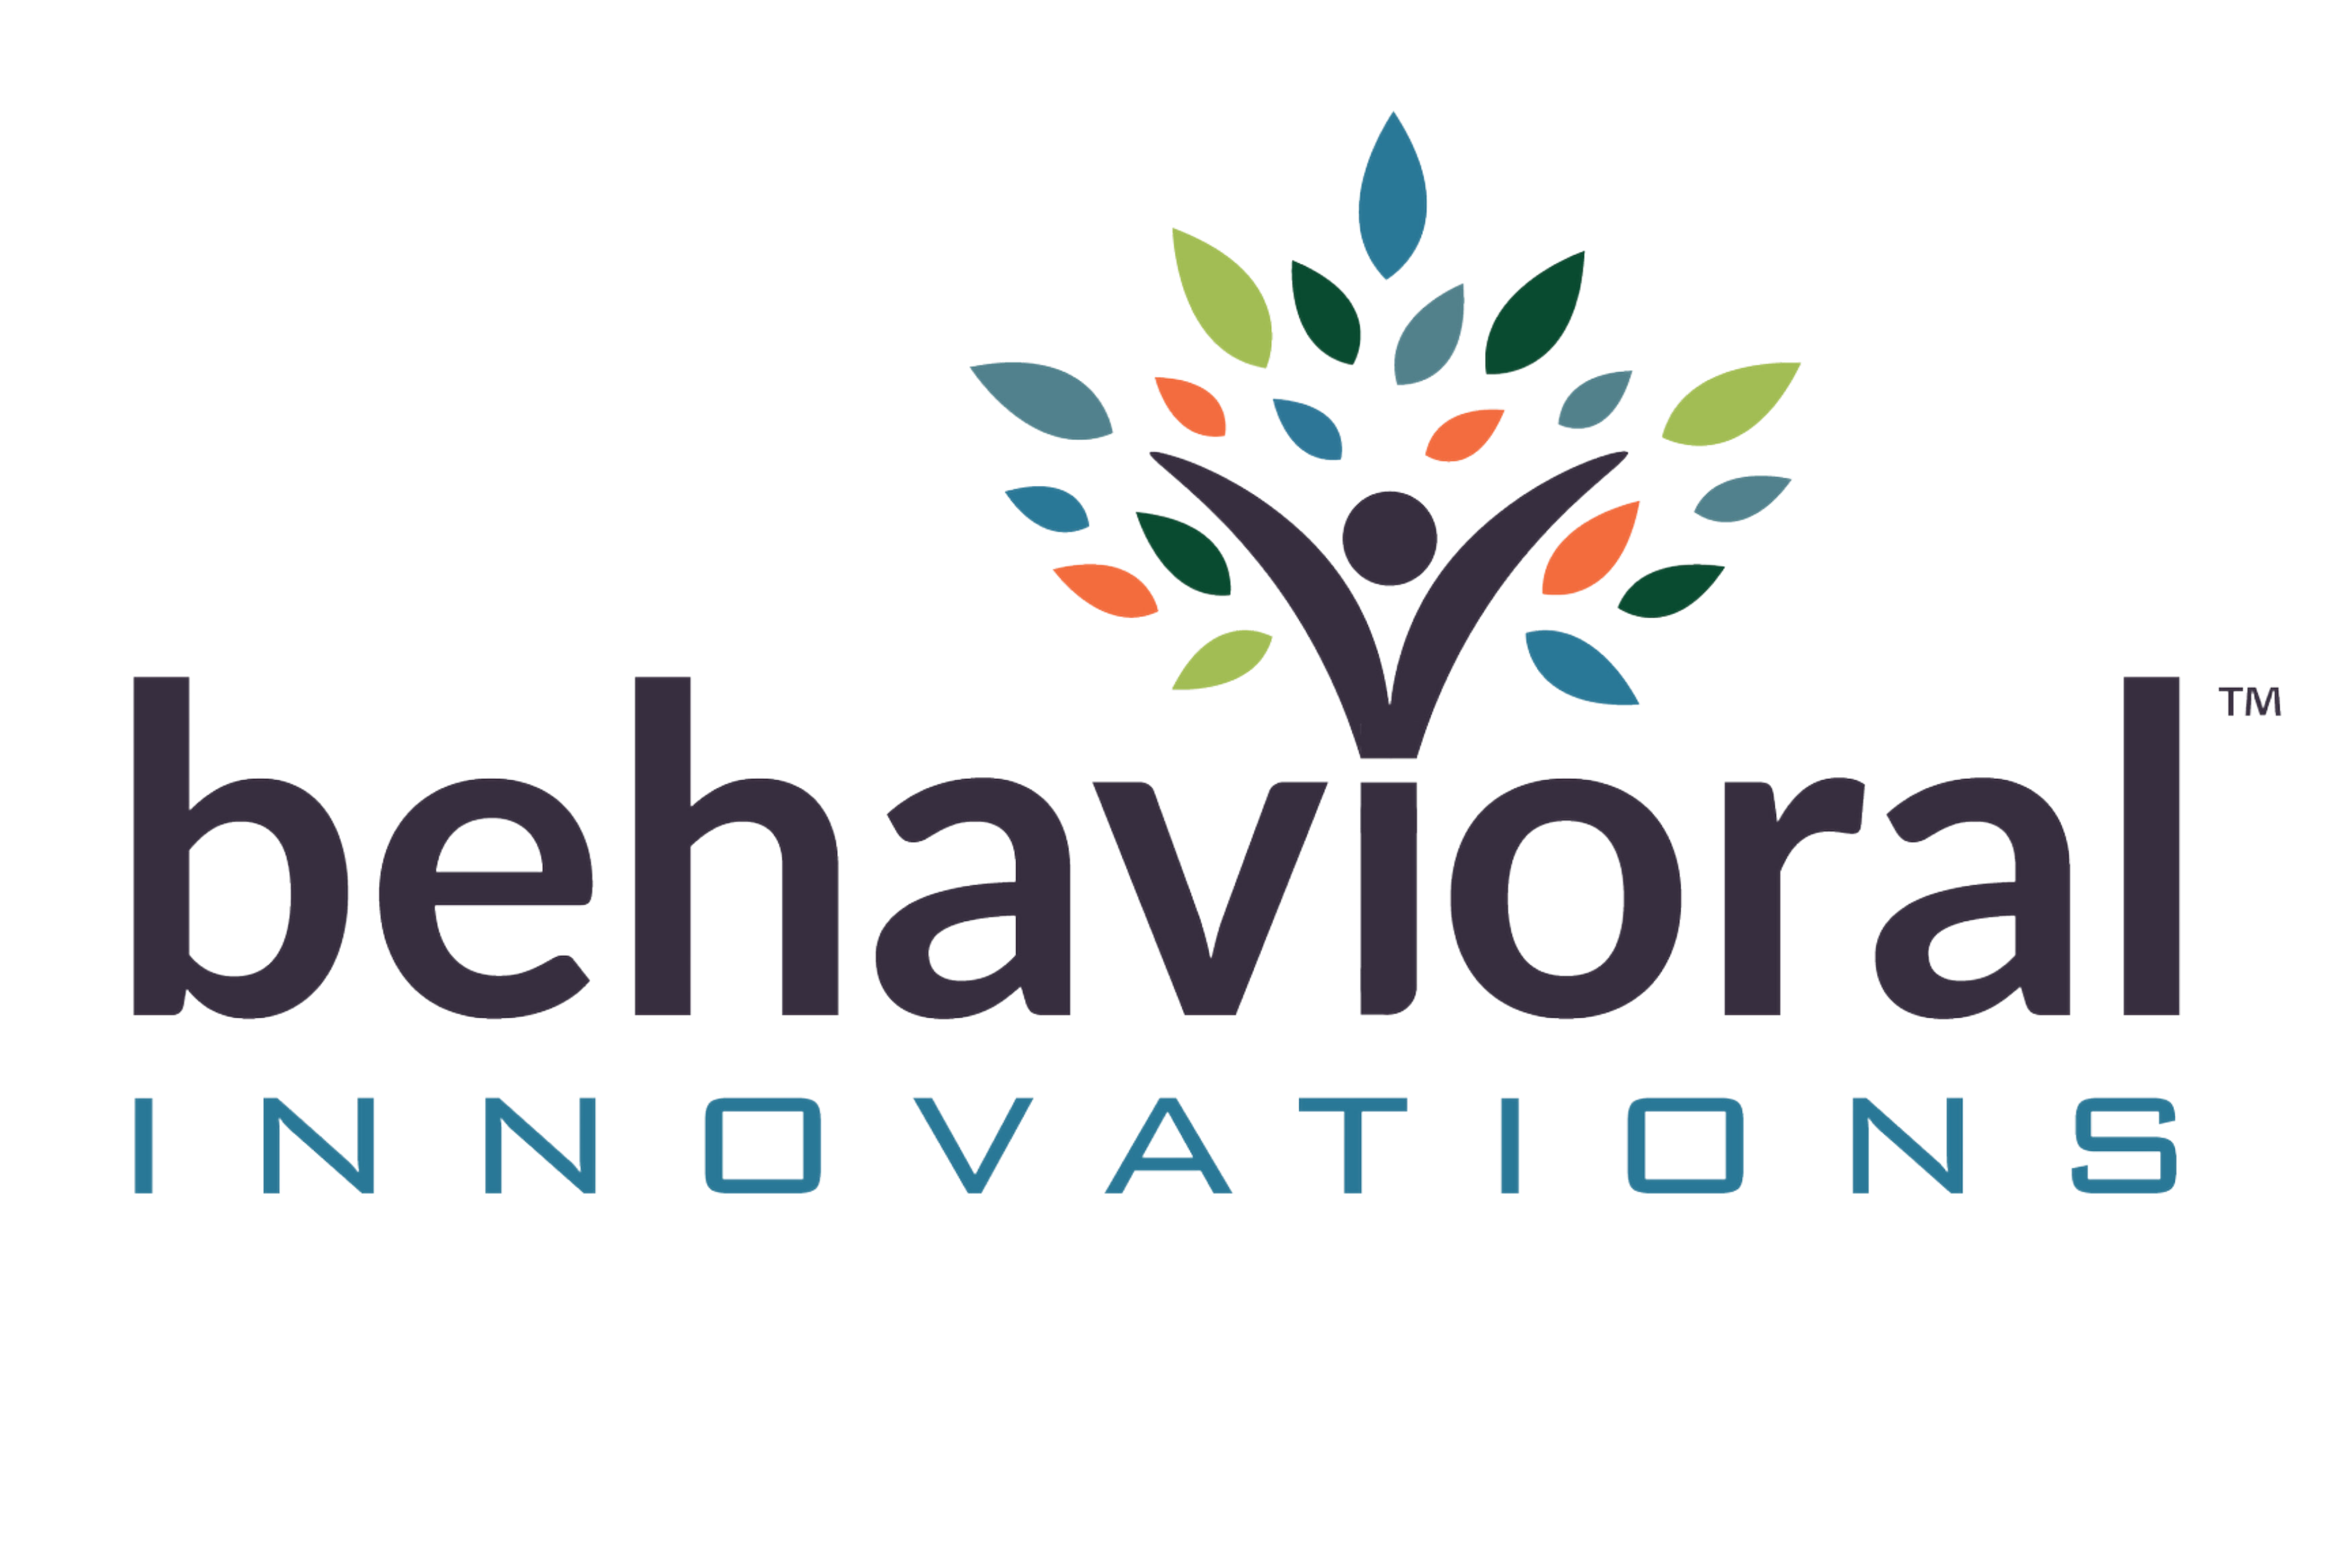 [Behavioral Innovations] *Service Provider Sponsors*